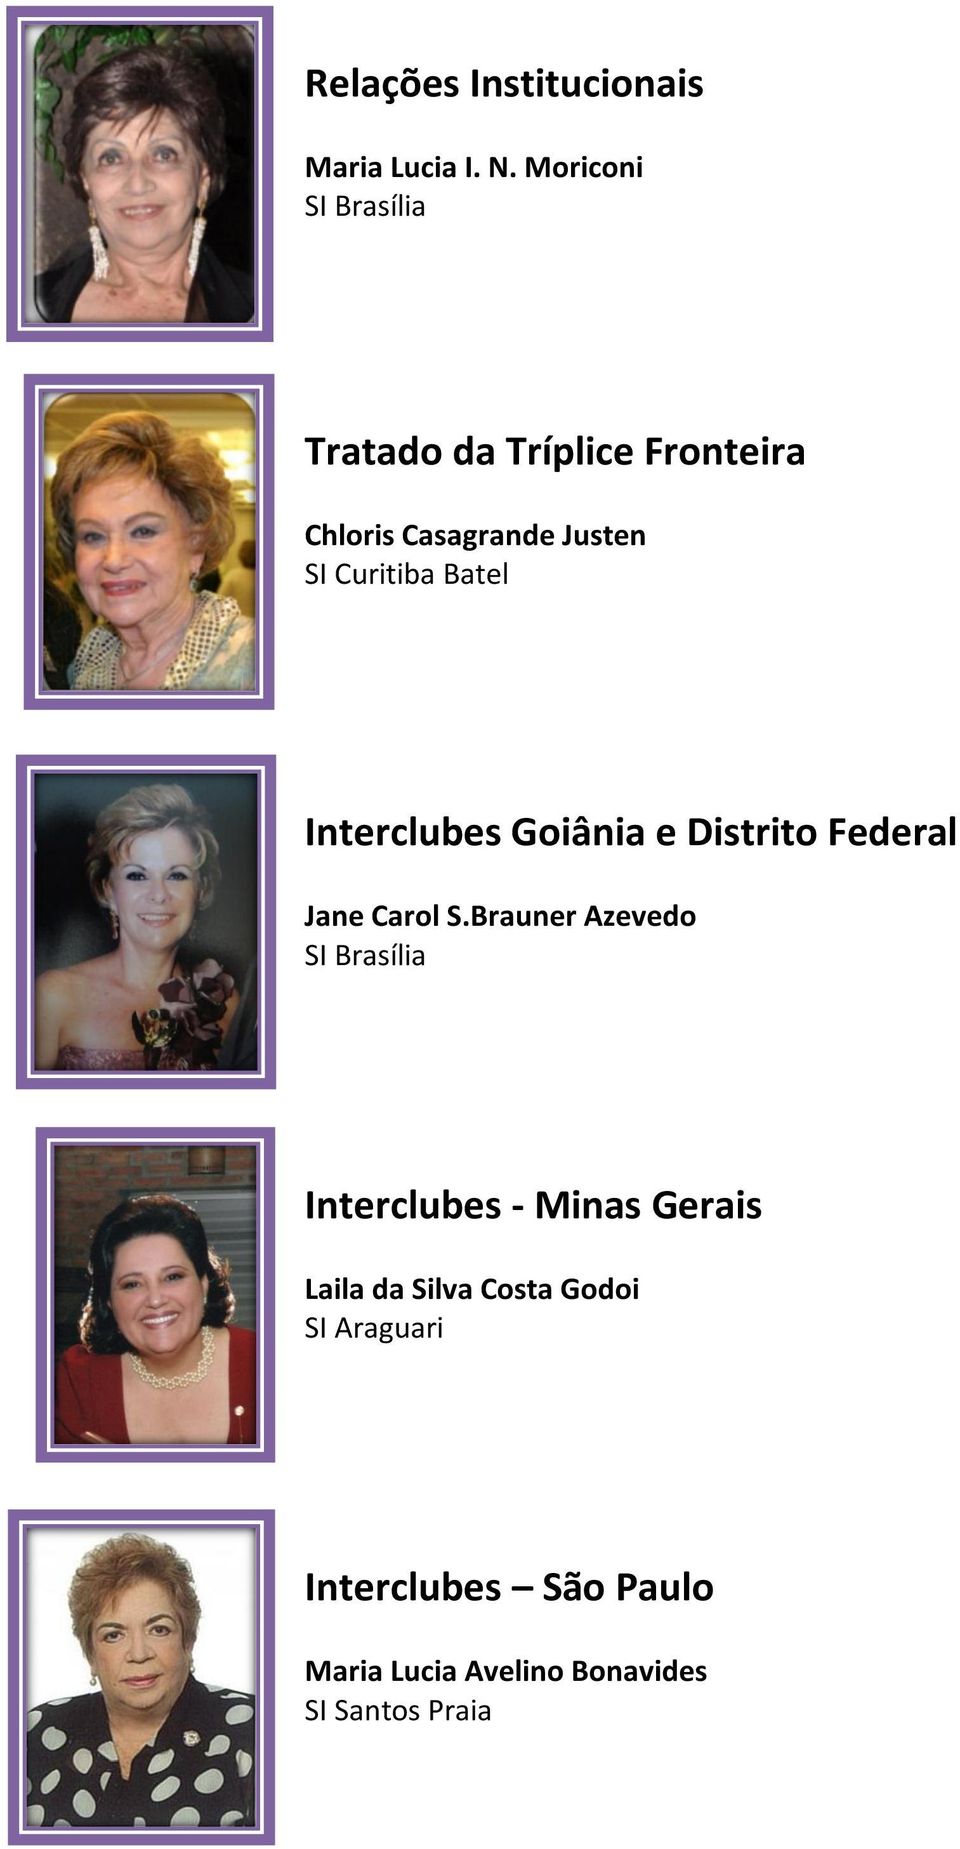 Curitiba Batel Interclubes Goiânia e Distrito Federal Jane Carol S.